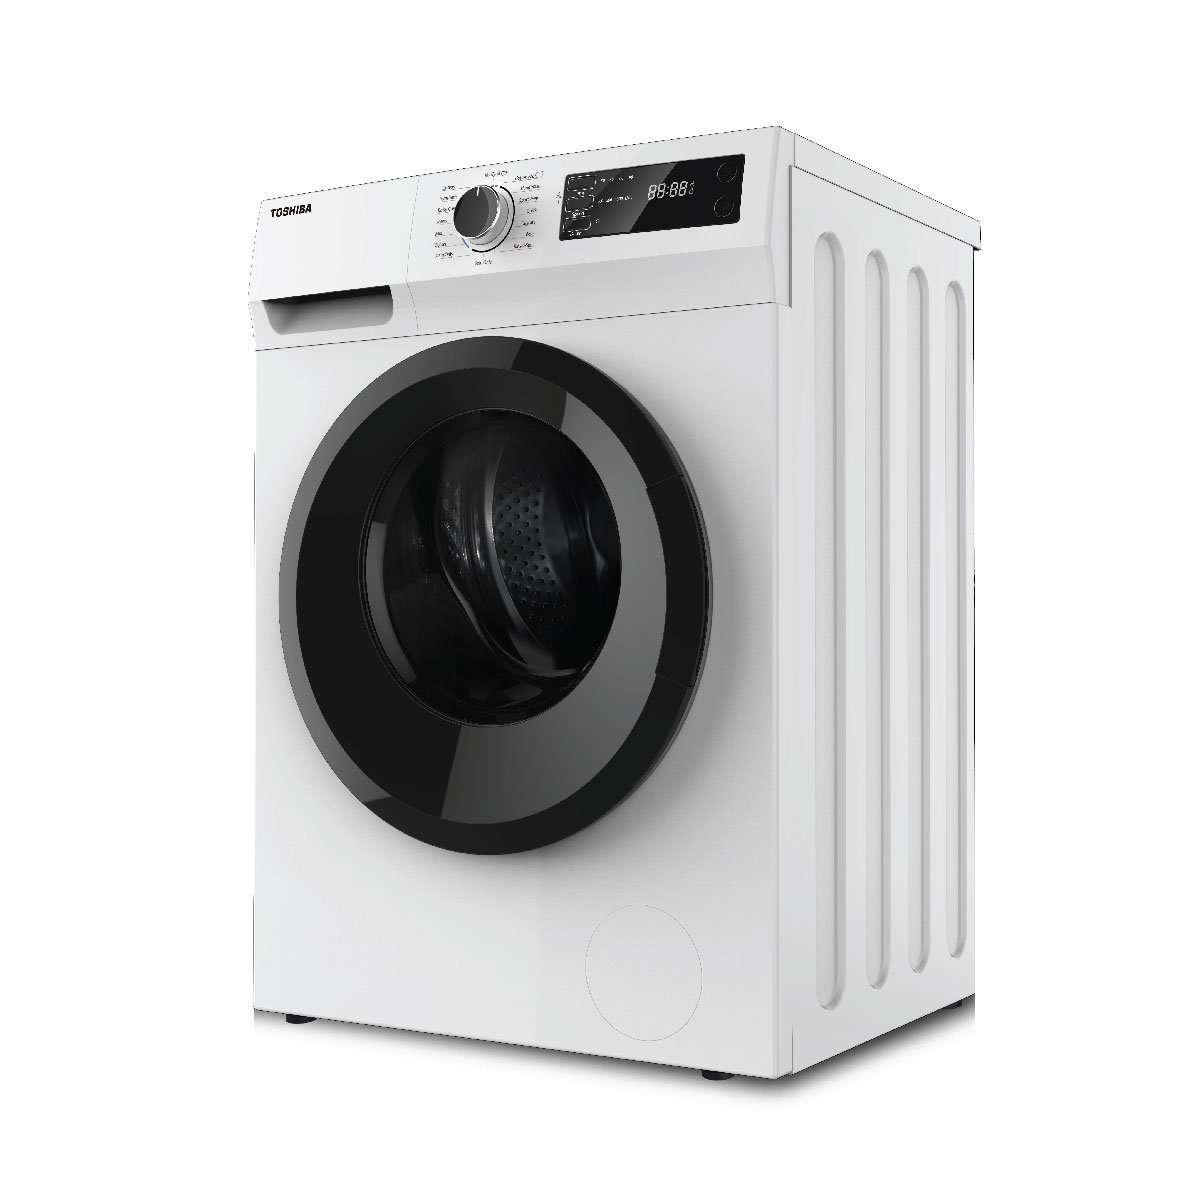 Toshiba 7.5 kg Inverter Front Load Washing Machine